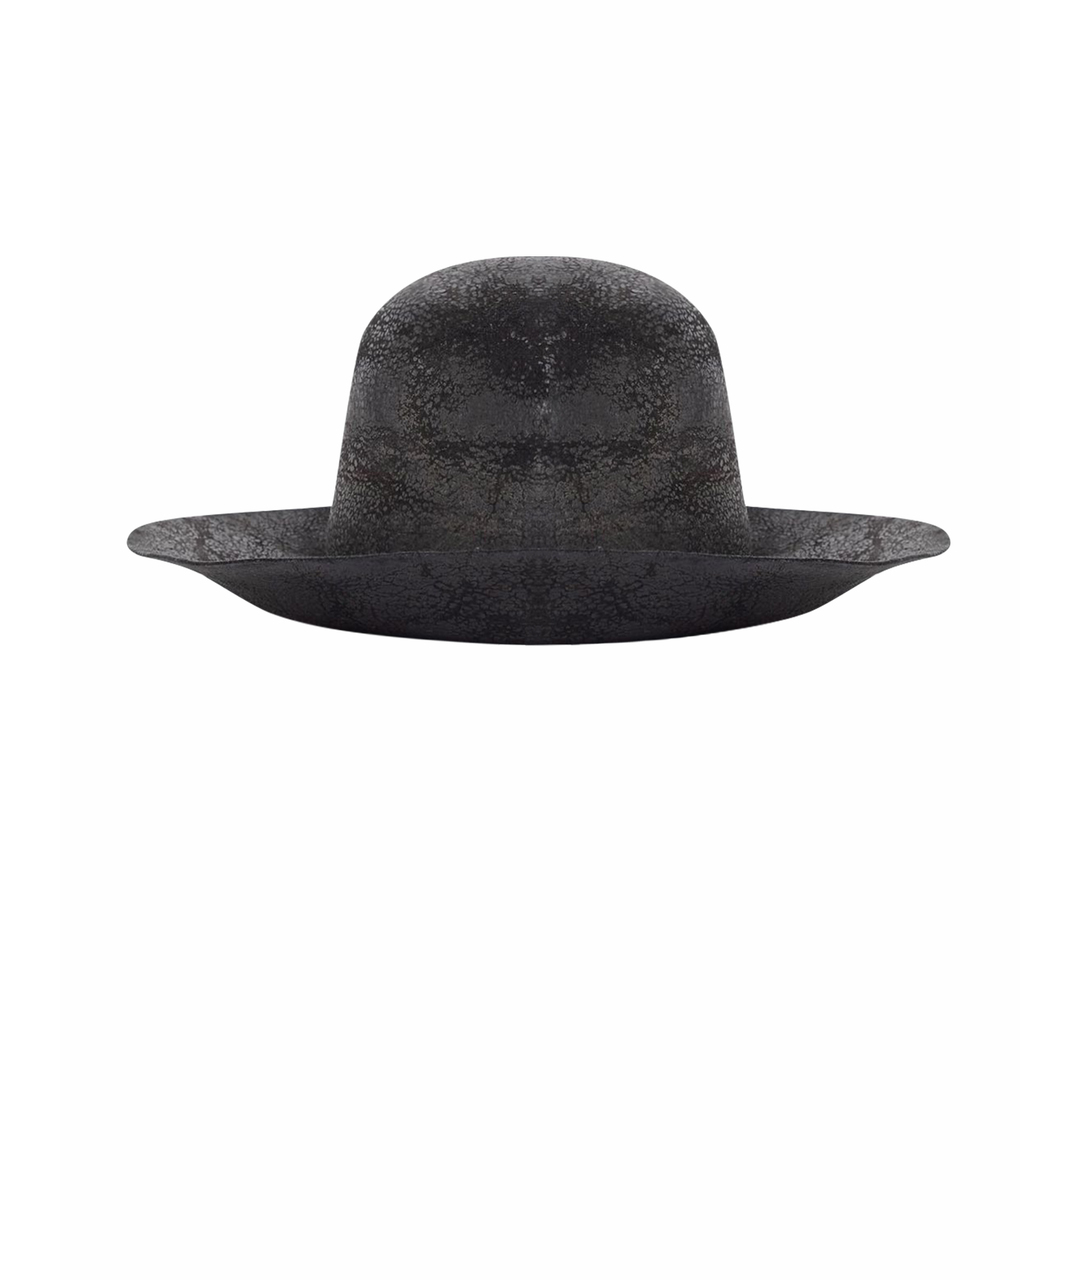 HORISAKI DESIGN & HANDEL Антрацитовая кожаная шляпа, фото 1